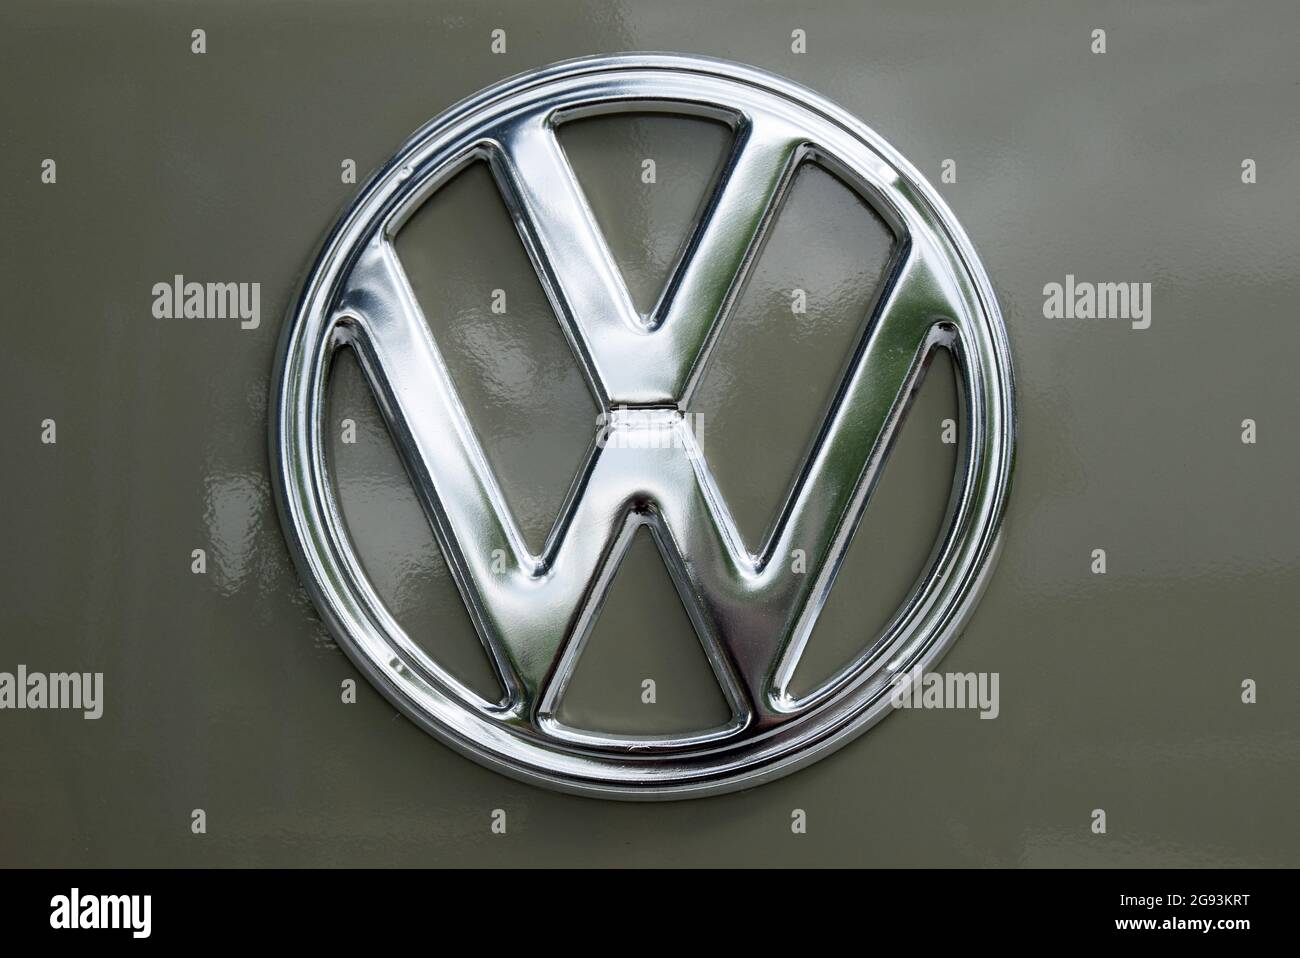 Emblema negro logo VW para llave